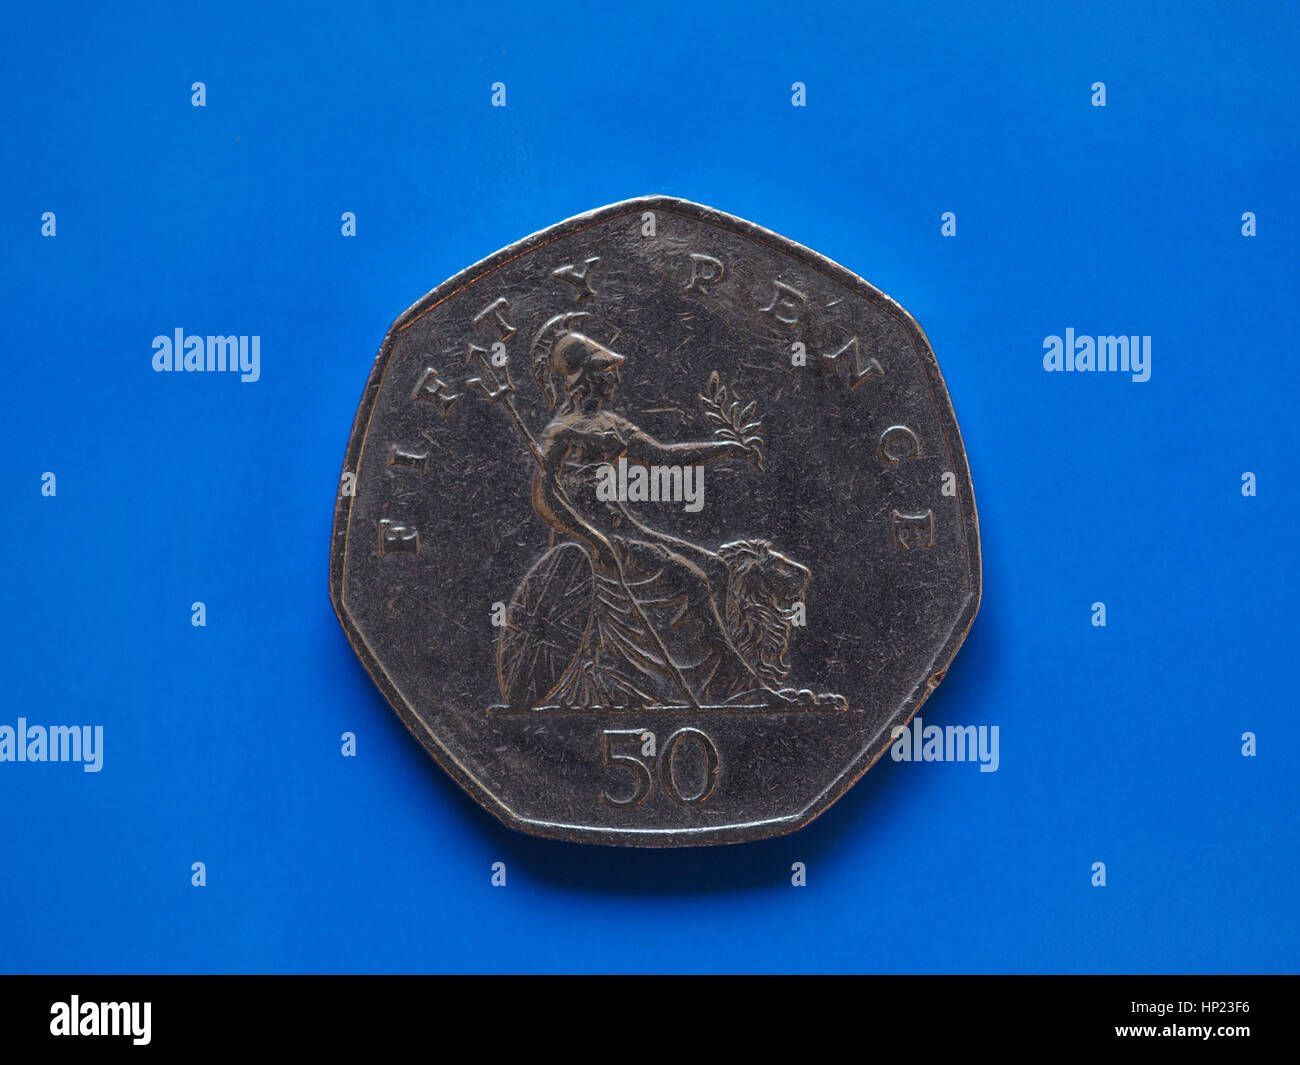 Cincuenta peniques acuñar moneda (GBP), la moneda del Reino Unido sobre fondo azul. Foto de stock